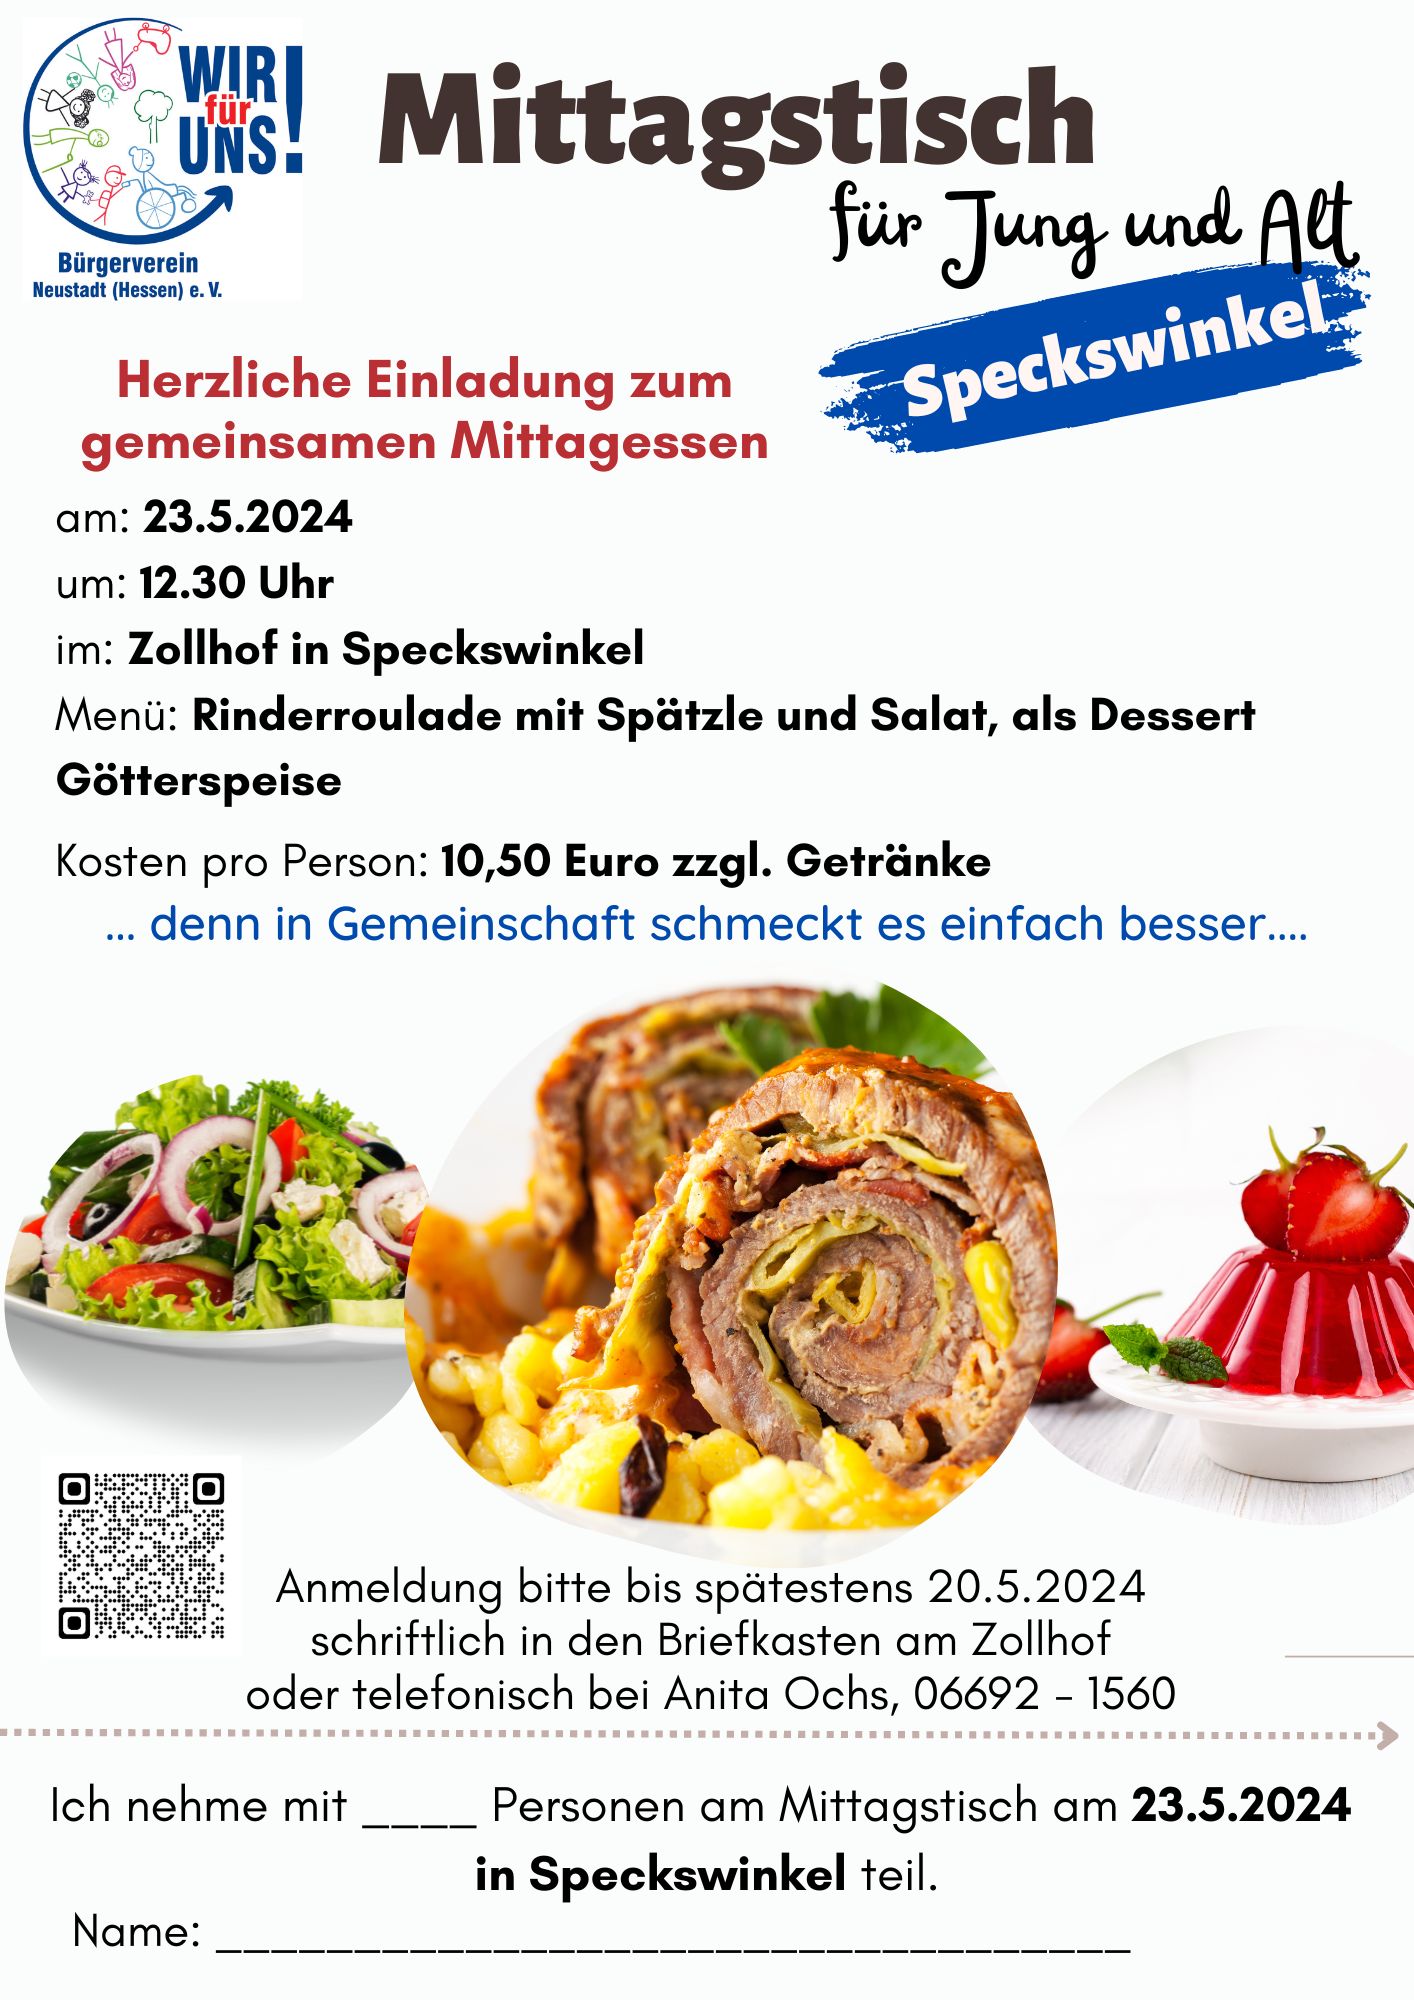 You are currently viewing Mittagstisch in Speckswinkel am 23.5.2024